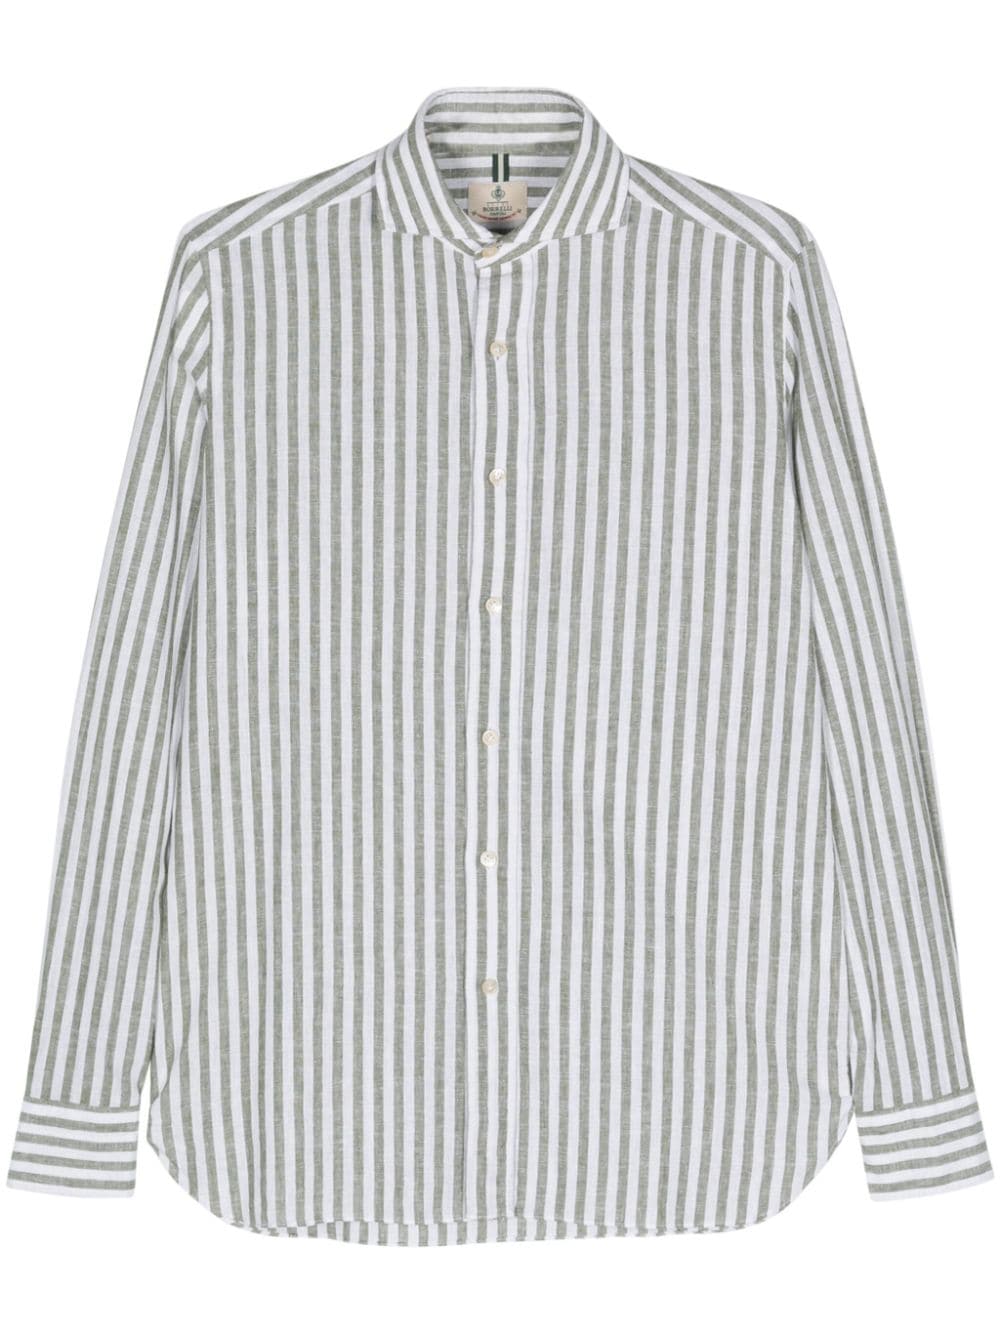 long-sleeve striped shirt